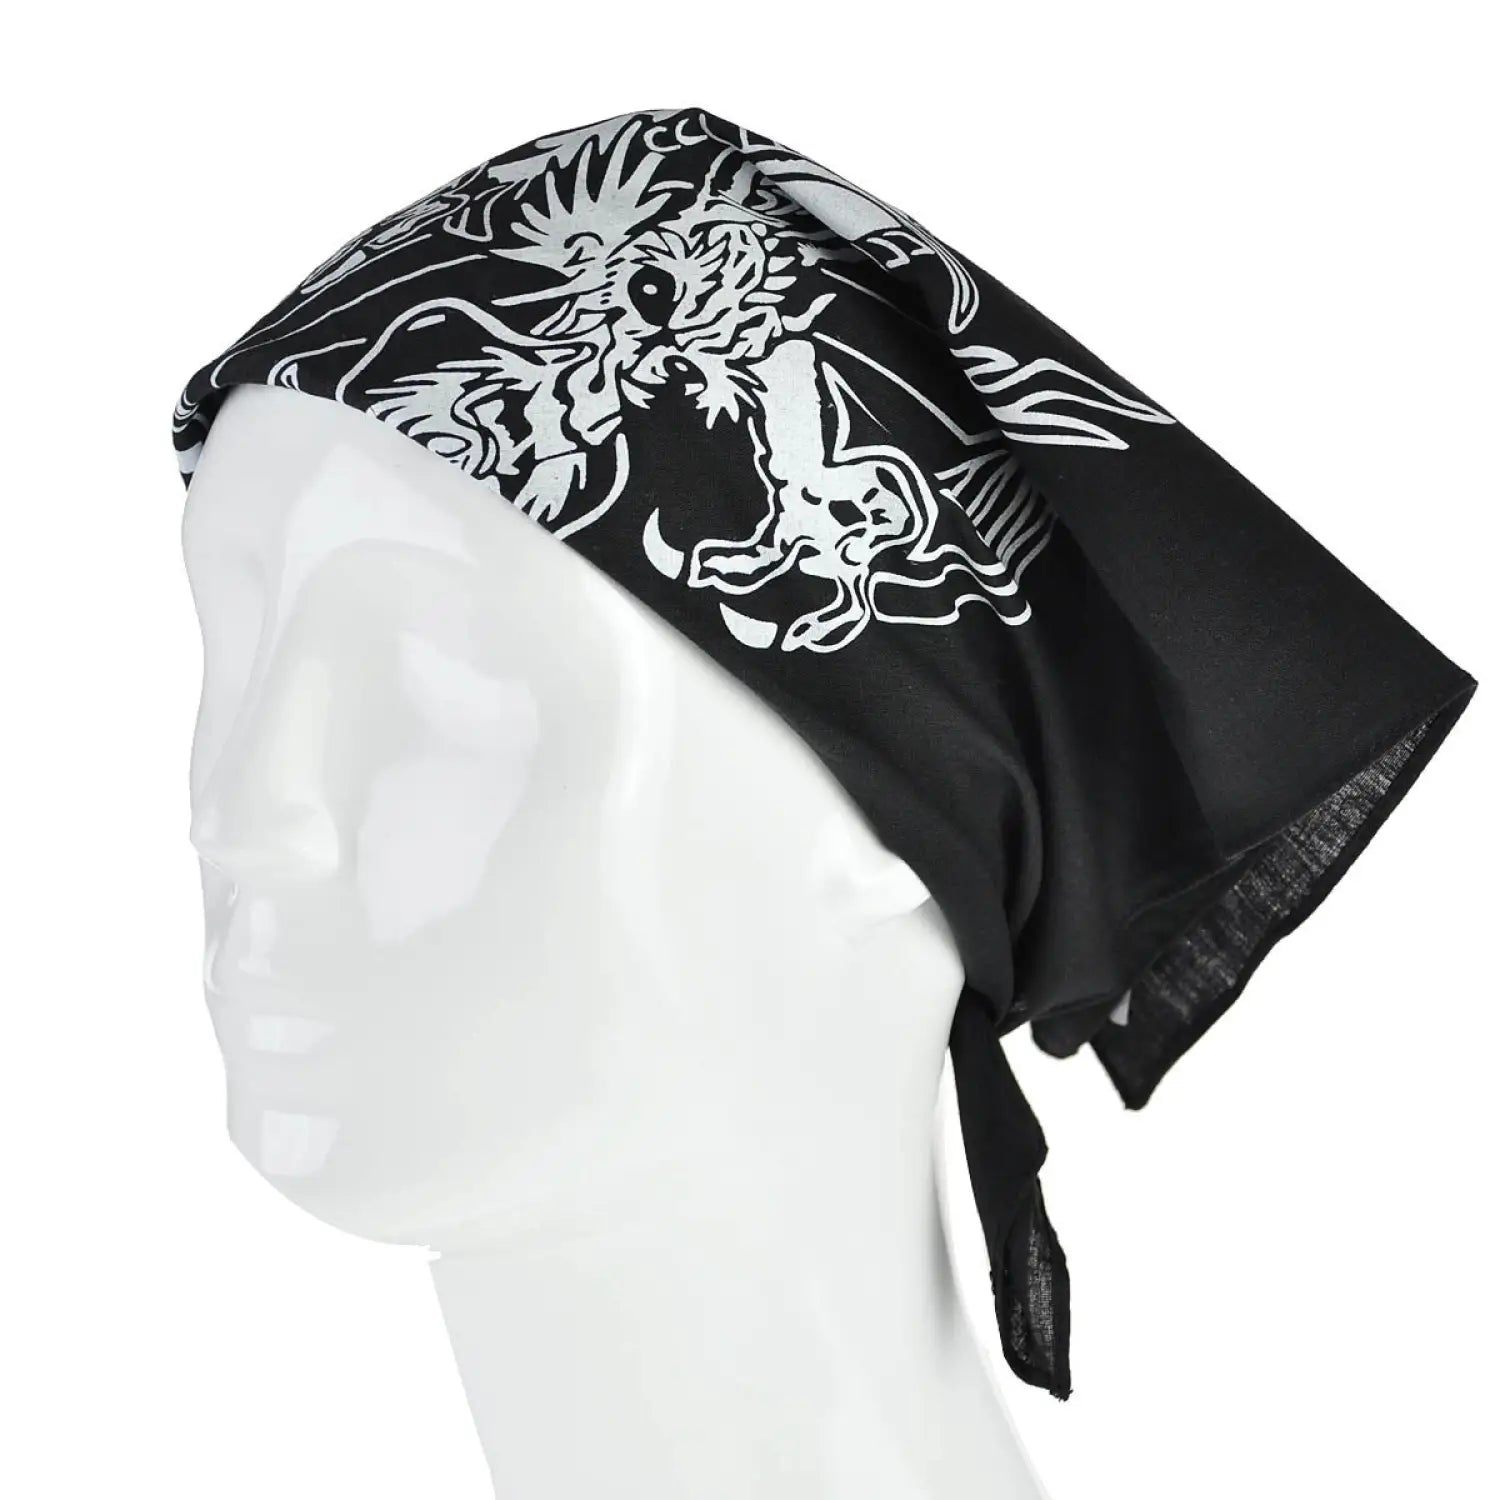 Dragon & Sword Print Bandana - Close up of head wearing bandana with dragon design, made of 100% cotton